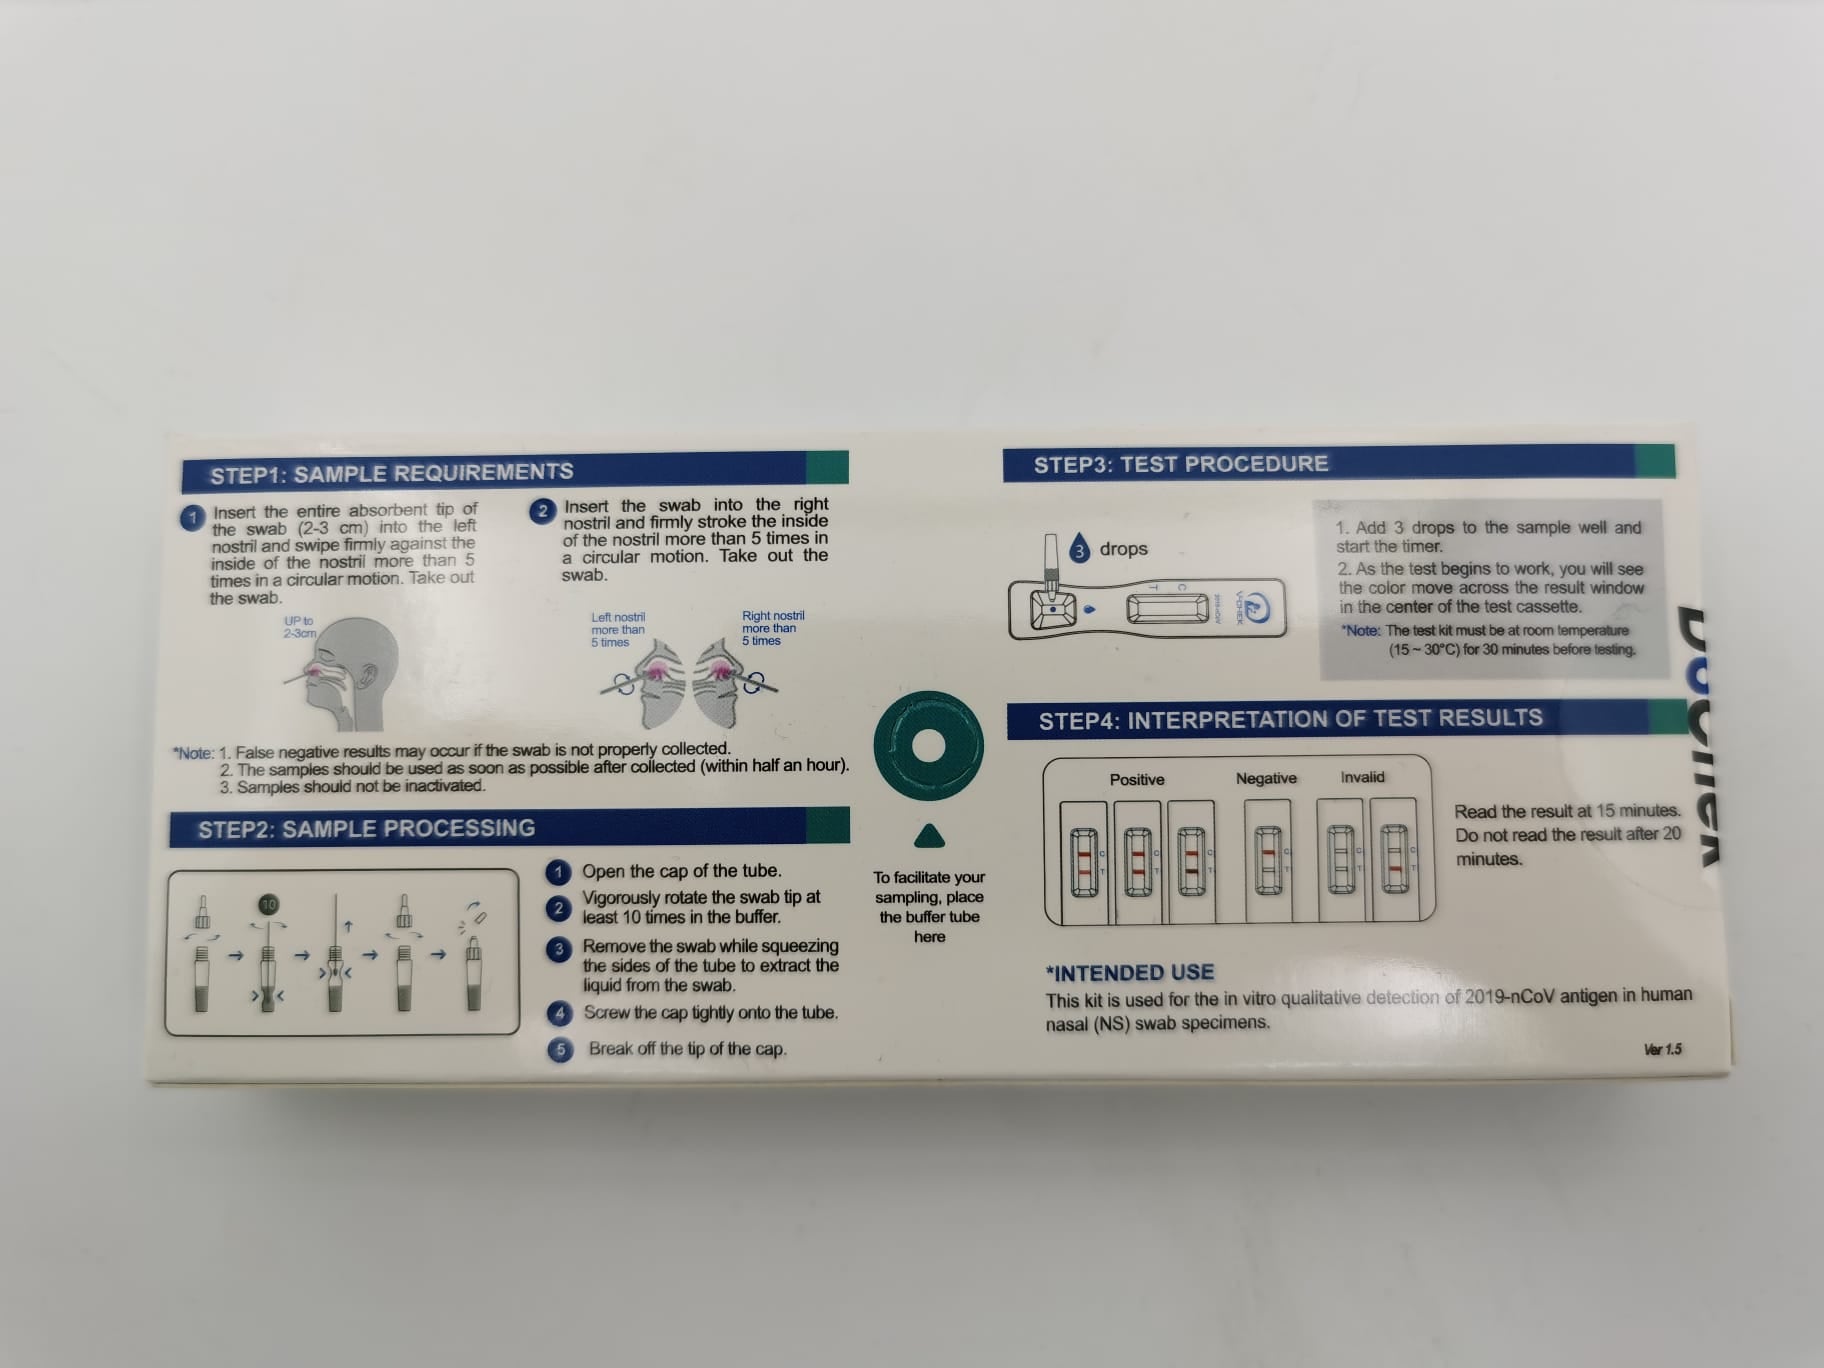 V-CHEK COVID-19 Rapid Test (Nasal Swab) 2019新冠病毒快速測試劑 (鼻腔拭子)